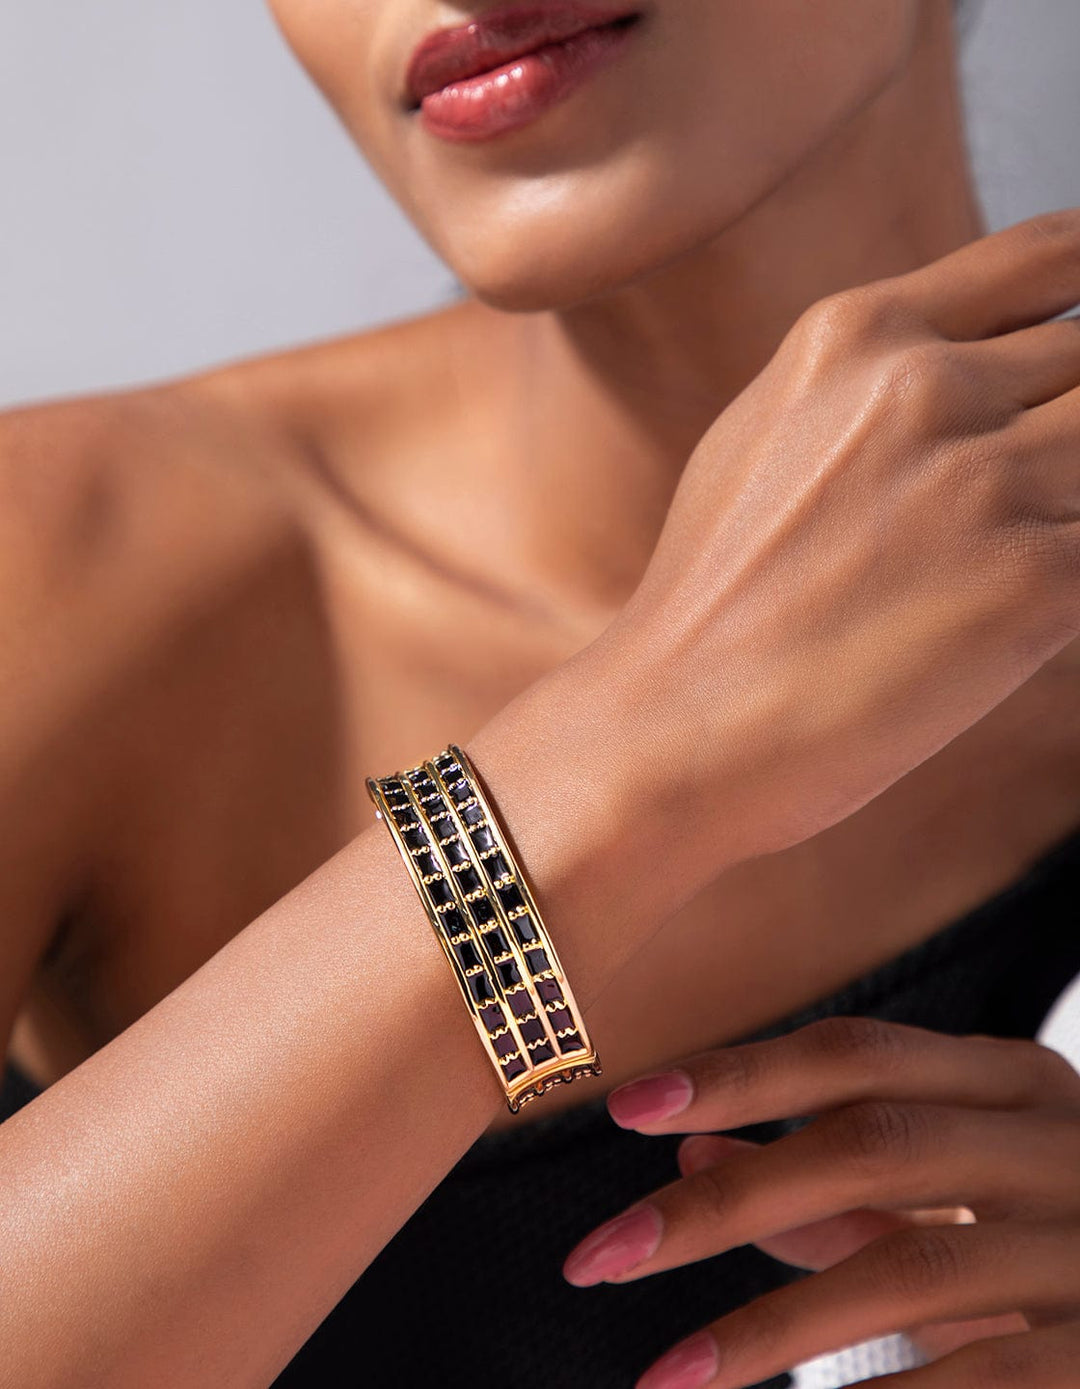 Rubans Voguish gold plated broad black bracelet with gold tone studded stones. Bangles & Bracelets